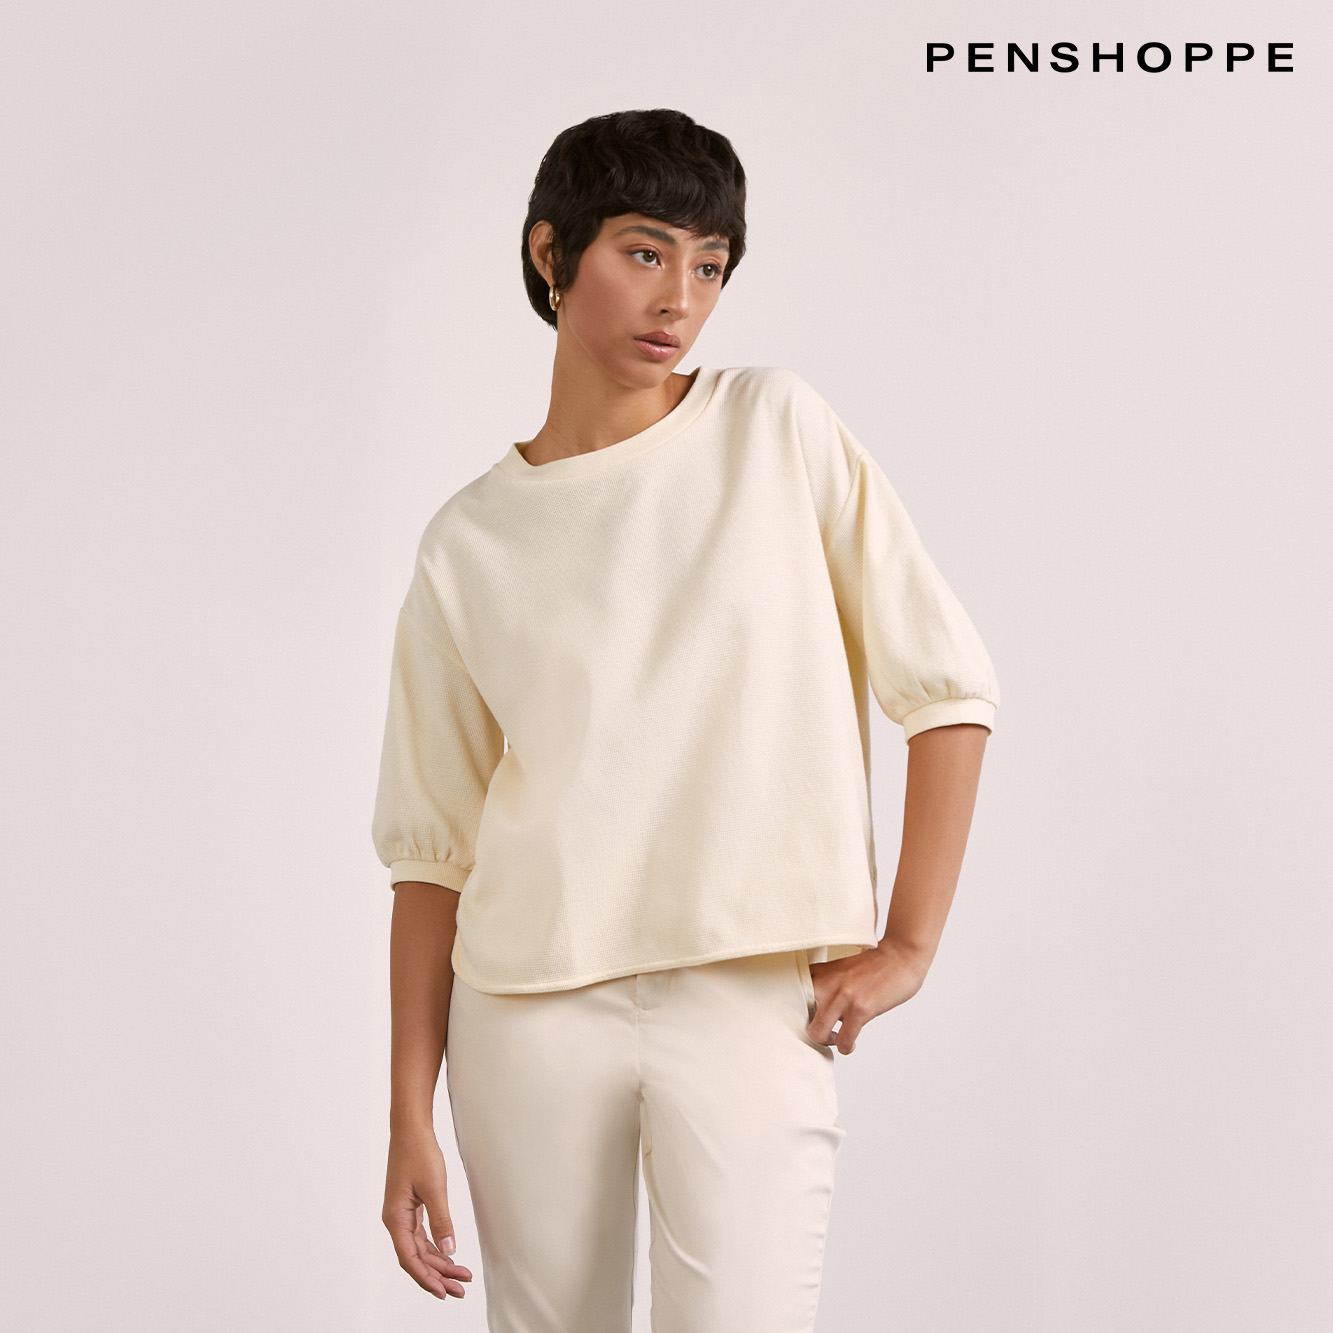 Penshoppe Dress Code Puff Sleeve Top For Women (Light Gray/Off White ...